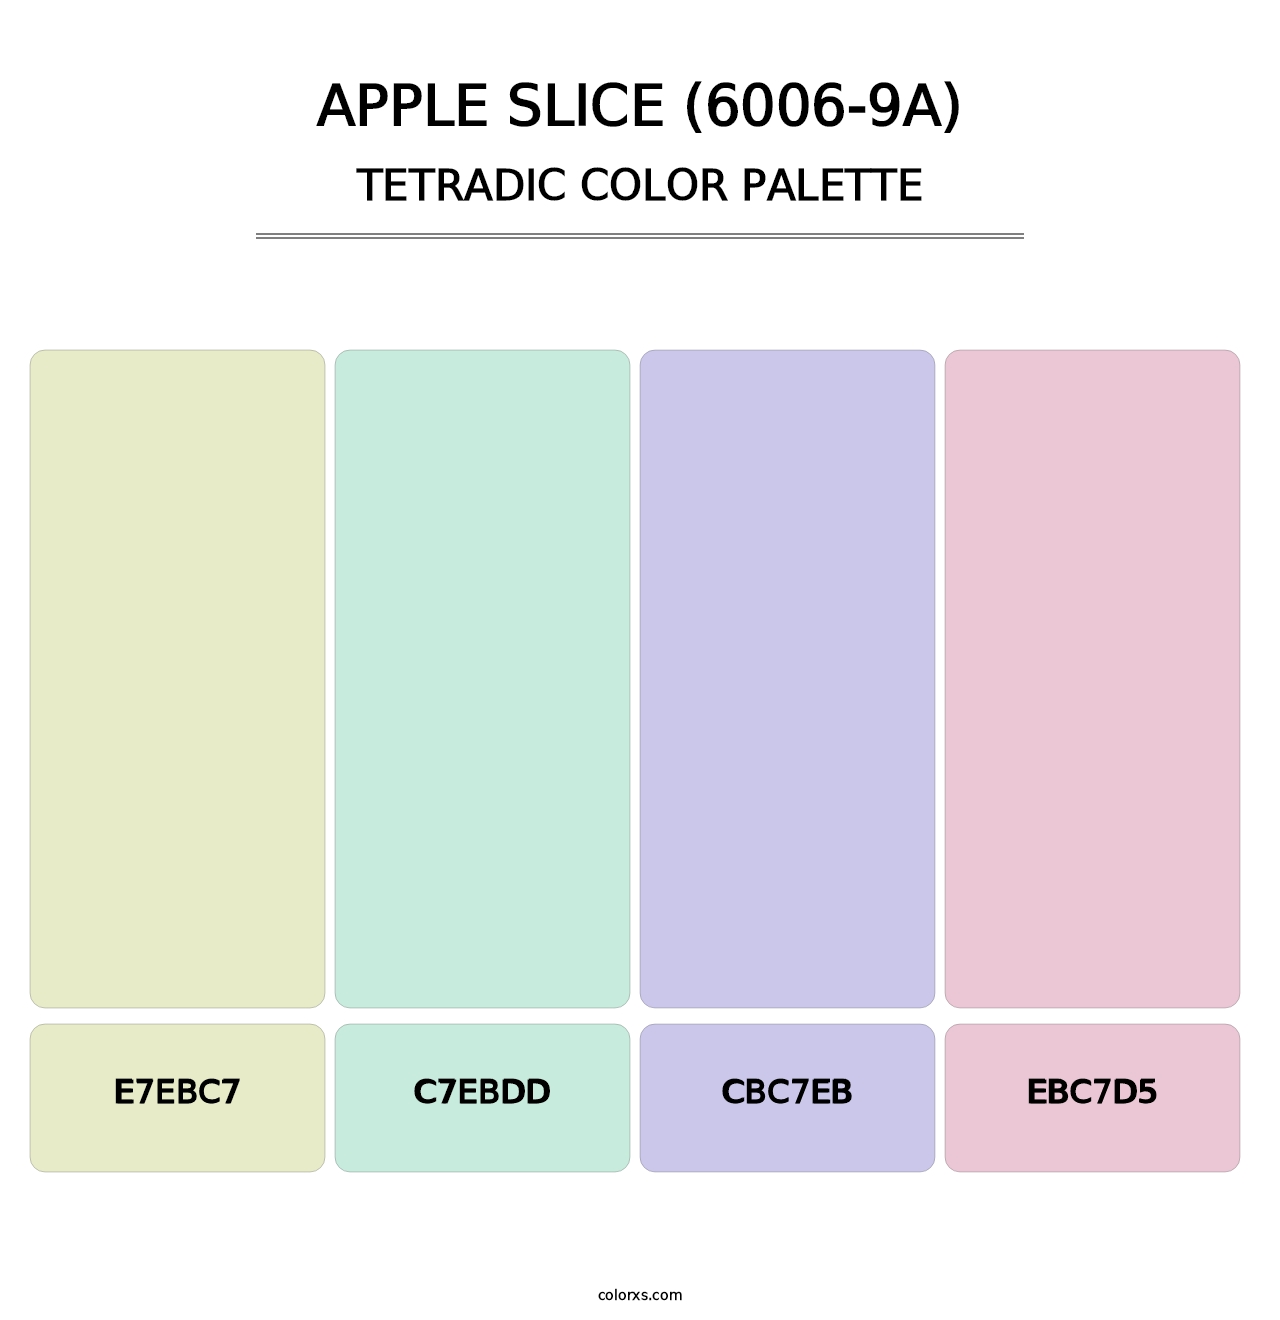 Apple Slice (6006-9A) - Tetradic Color Palette